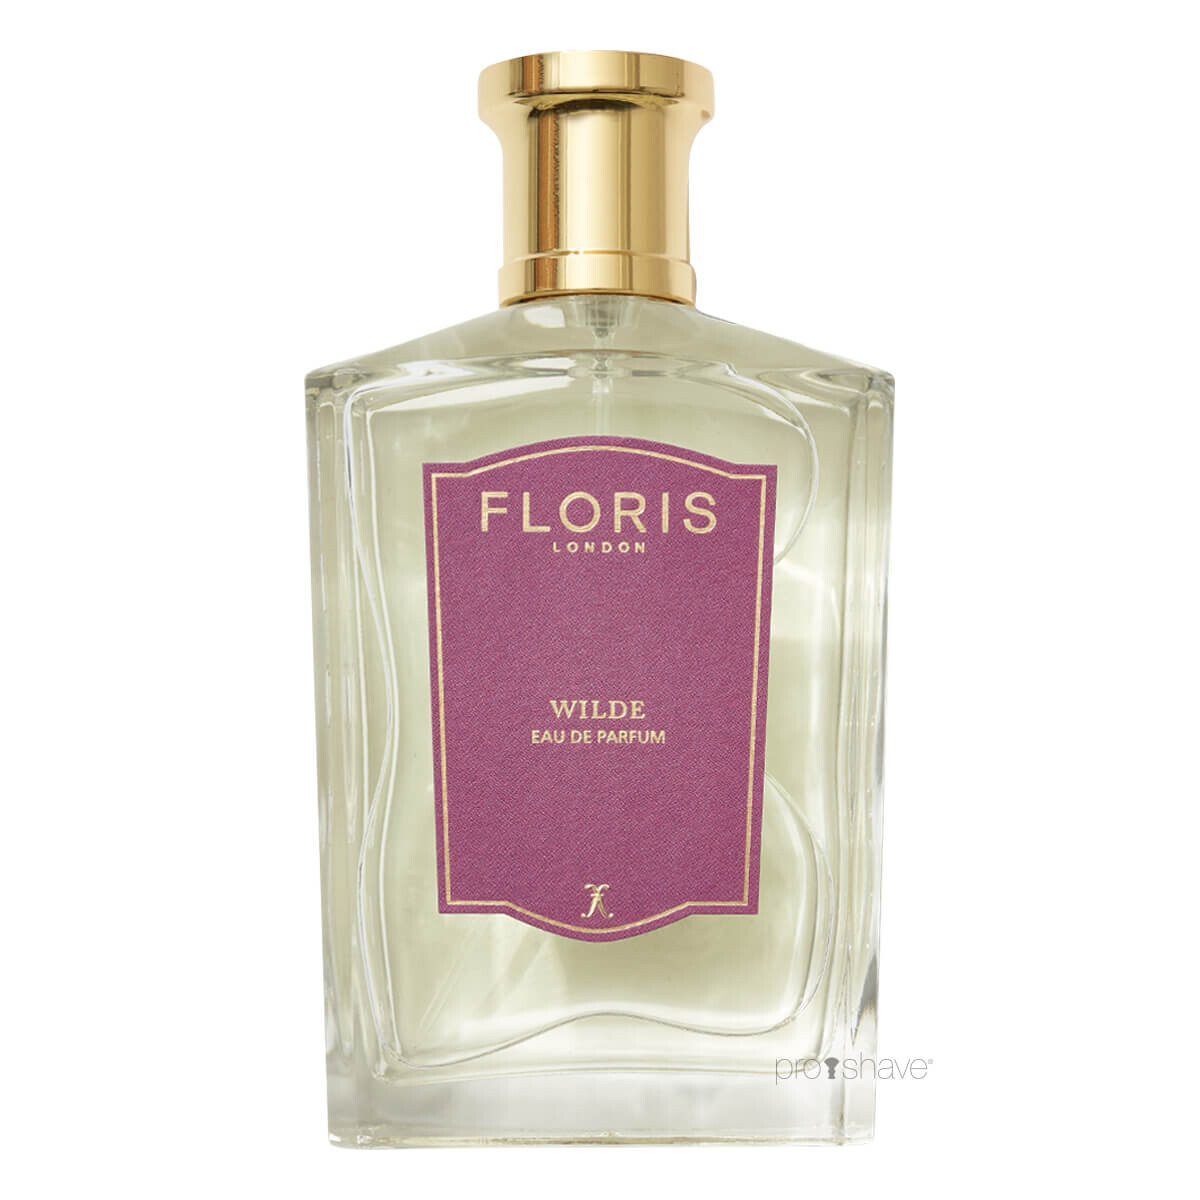 Billede af Floris Wilde, Eau de Parfum, 100 ml.